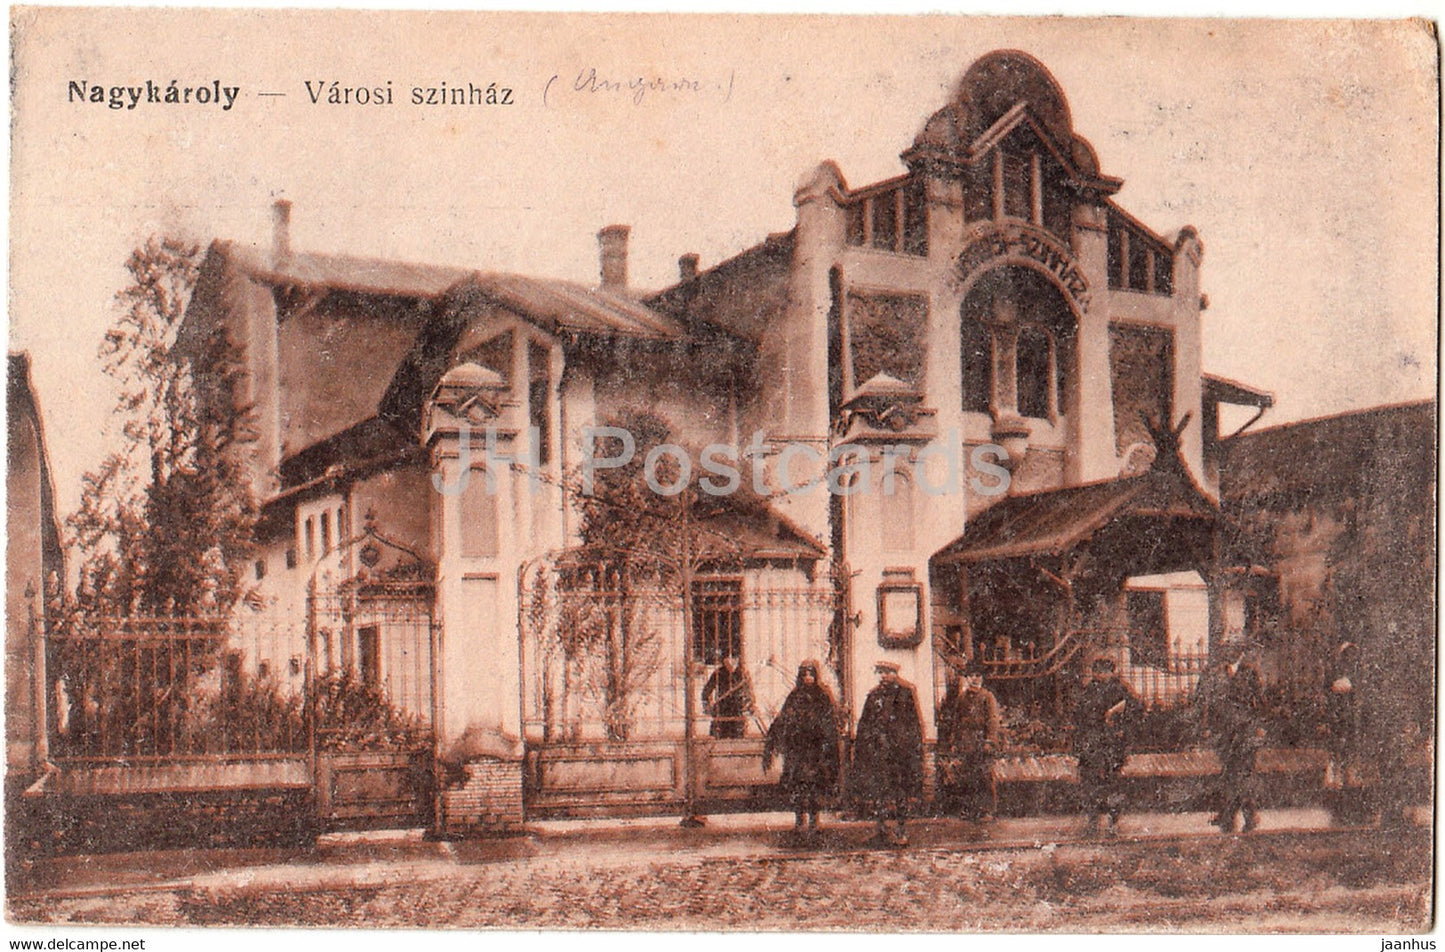 Nagykaroly - Varosi szinhaz - City Theater - old postcard - Hungary - used - JH Postcards